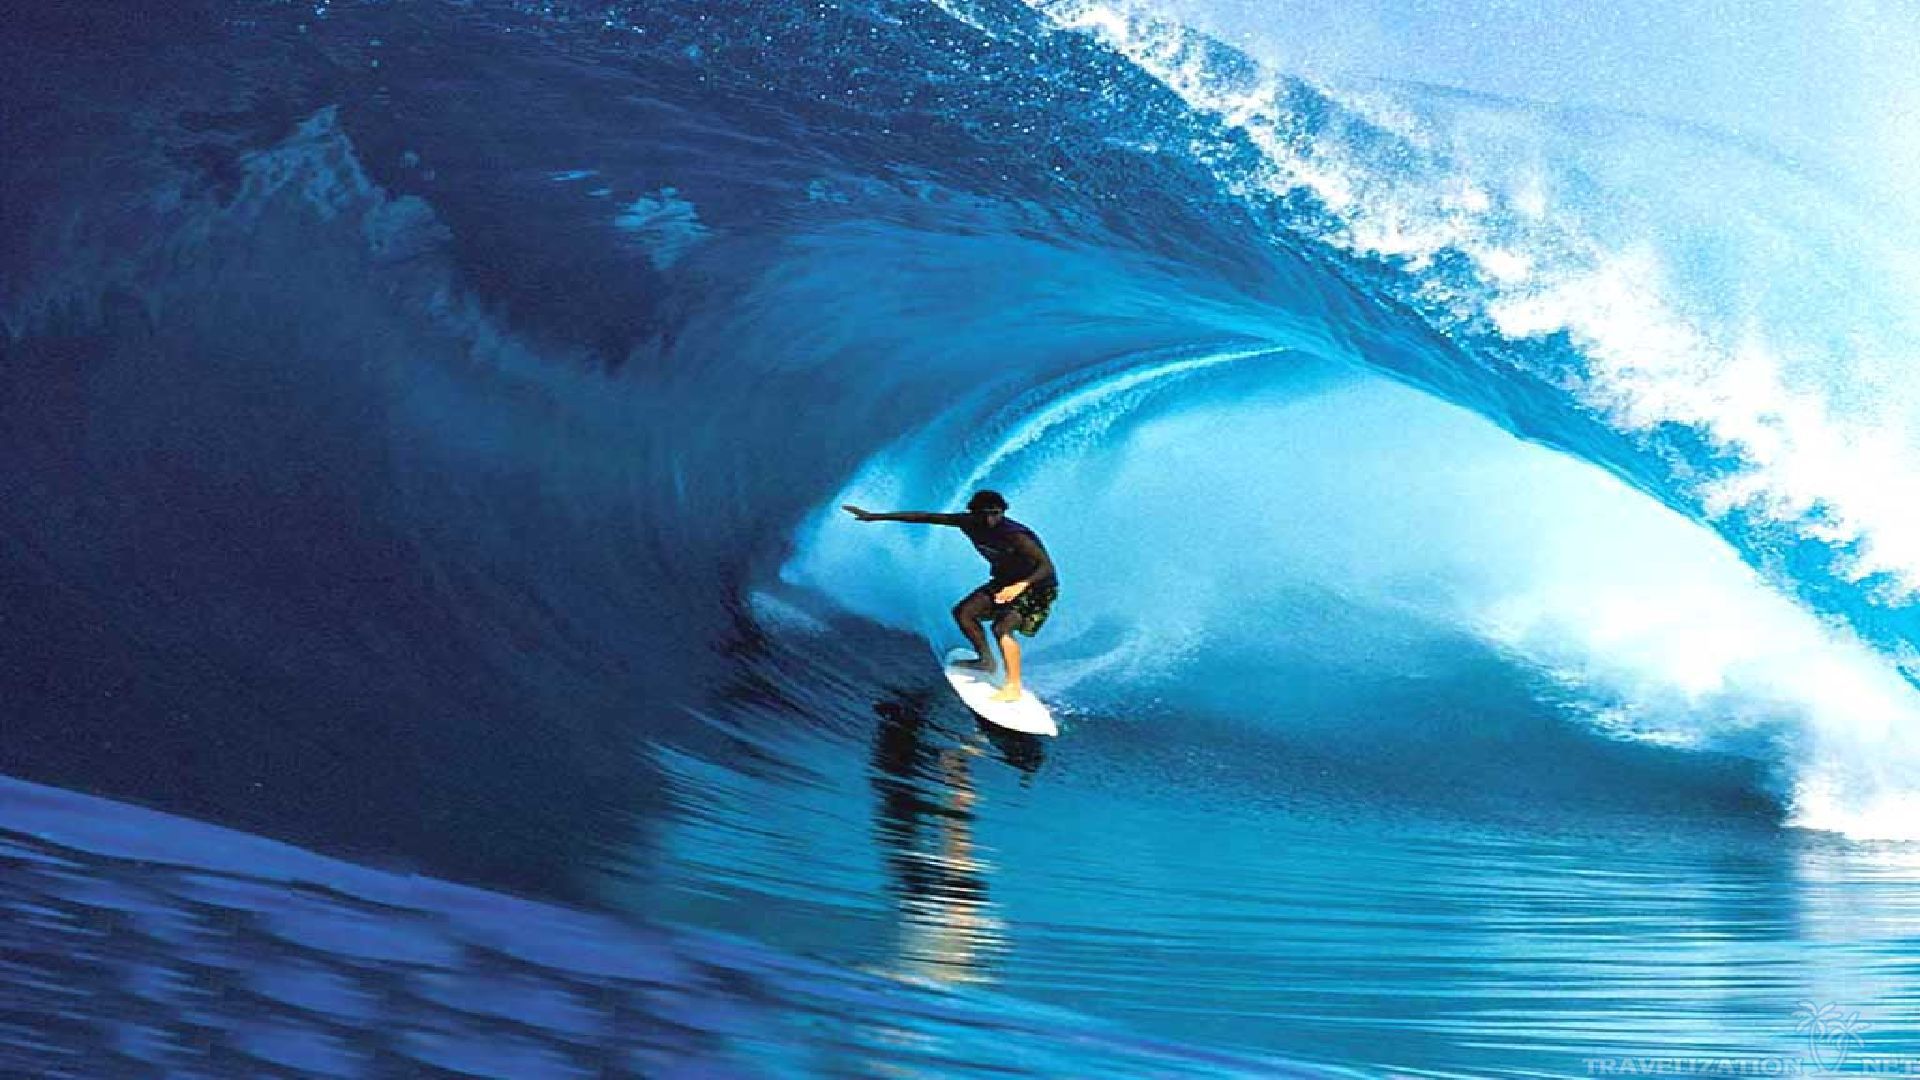 High Resolution Wallpaper | Surfing 1920x1080 px